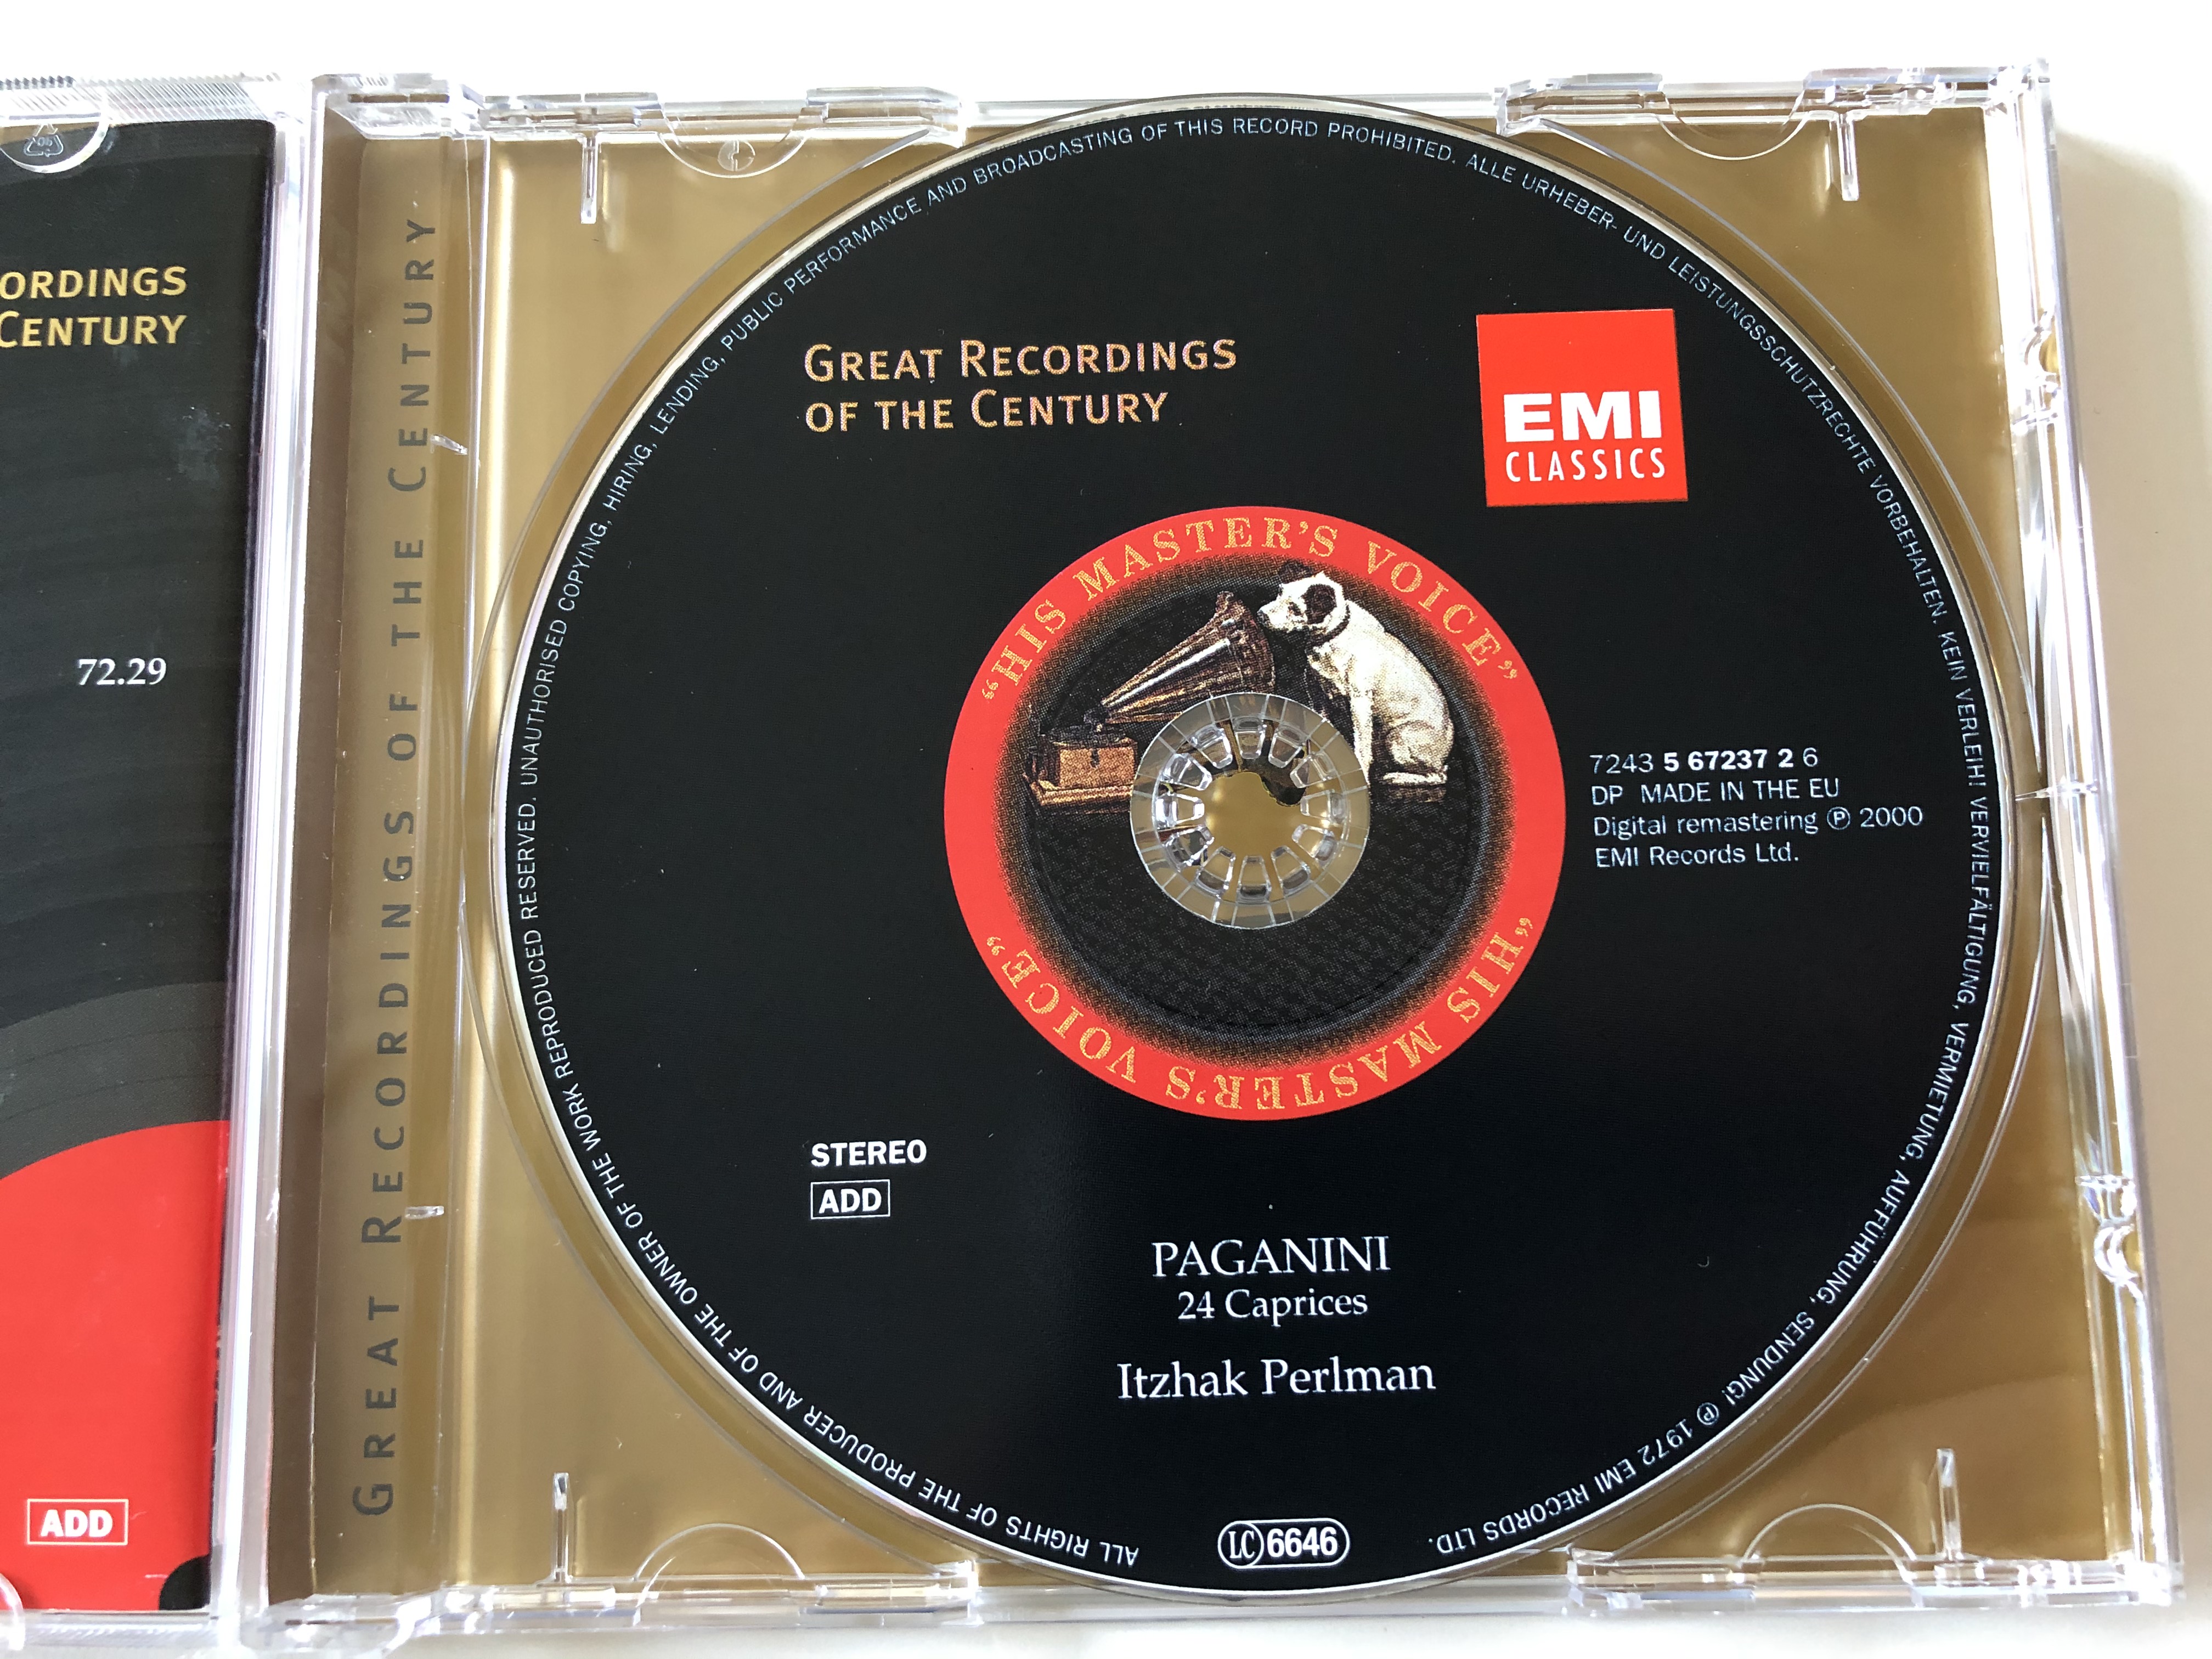 paganini-24-caprices-itzhak-perlman-great-recordings-of-the-century-emi-classics-audio-cd-2000-stereo-7243-5-67237-2-6-6-.jpg